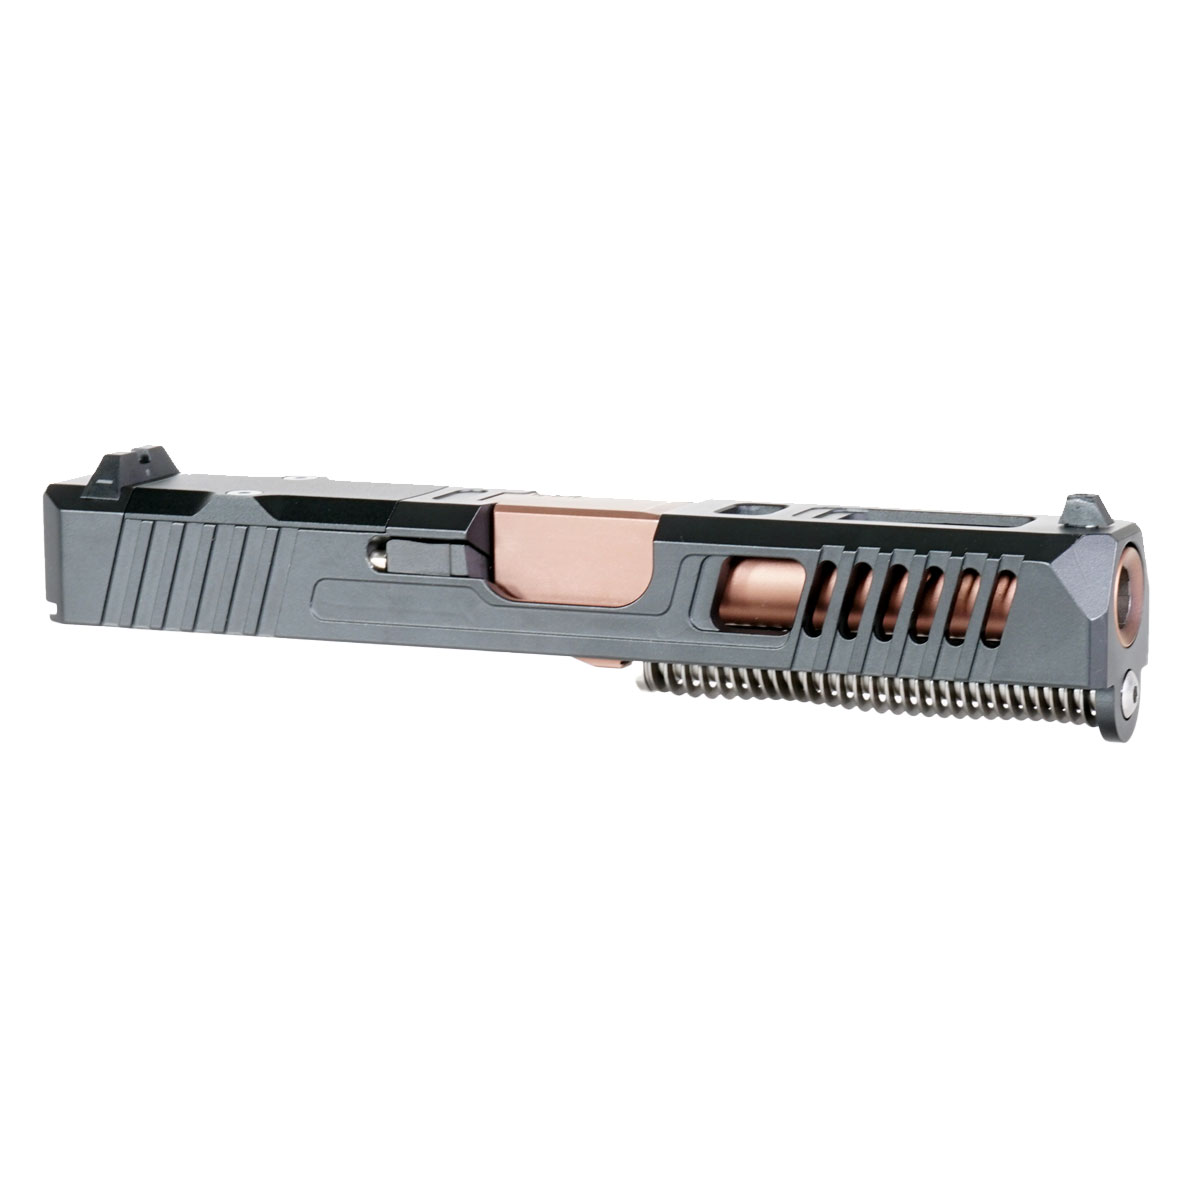 DTT 'White Wood' 9mm Complete Slide Kit - Glock 19 Gen 1-3 Compatible